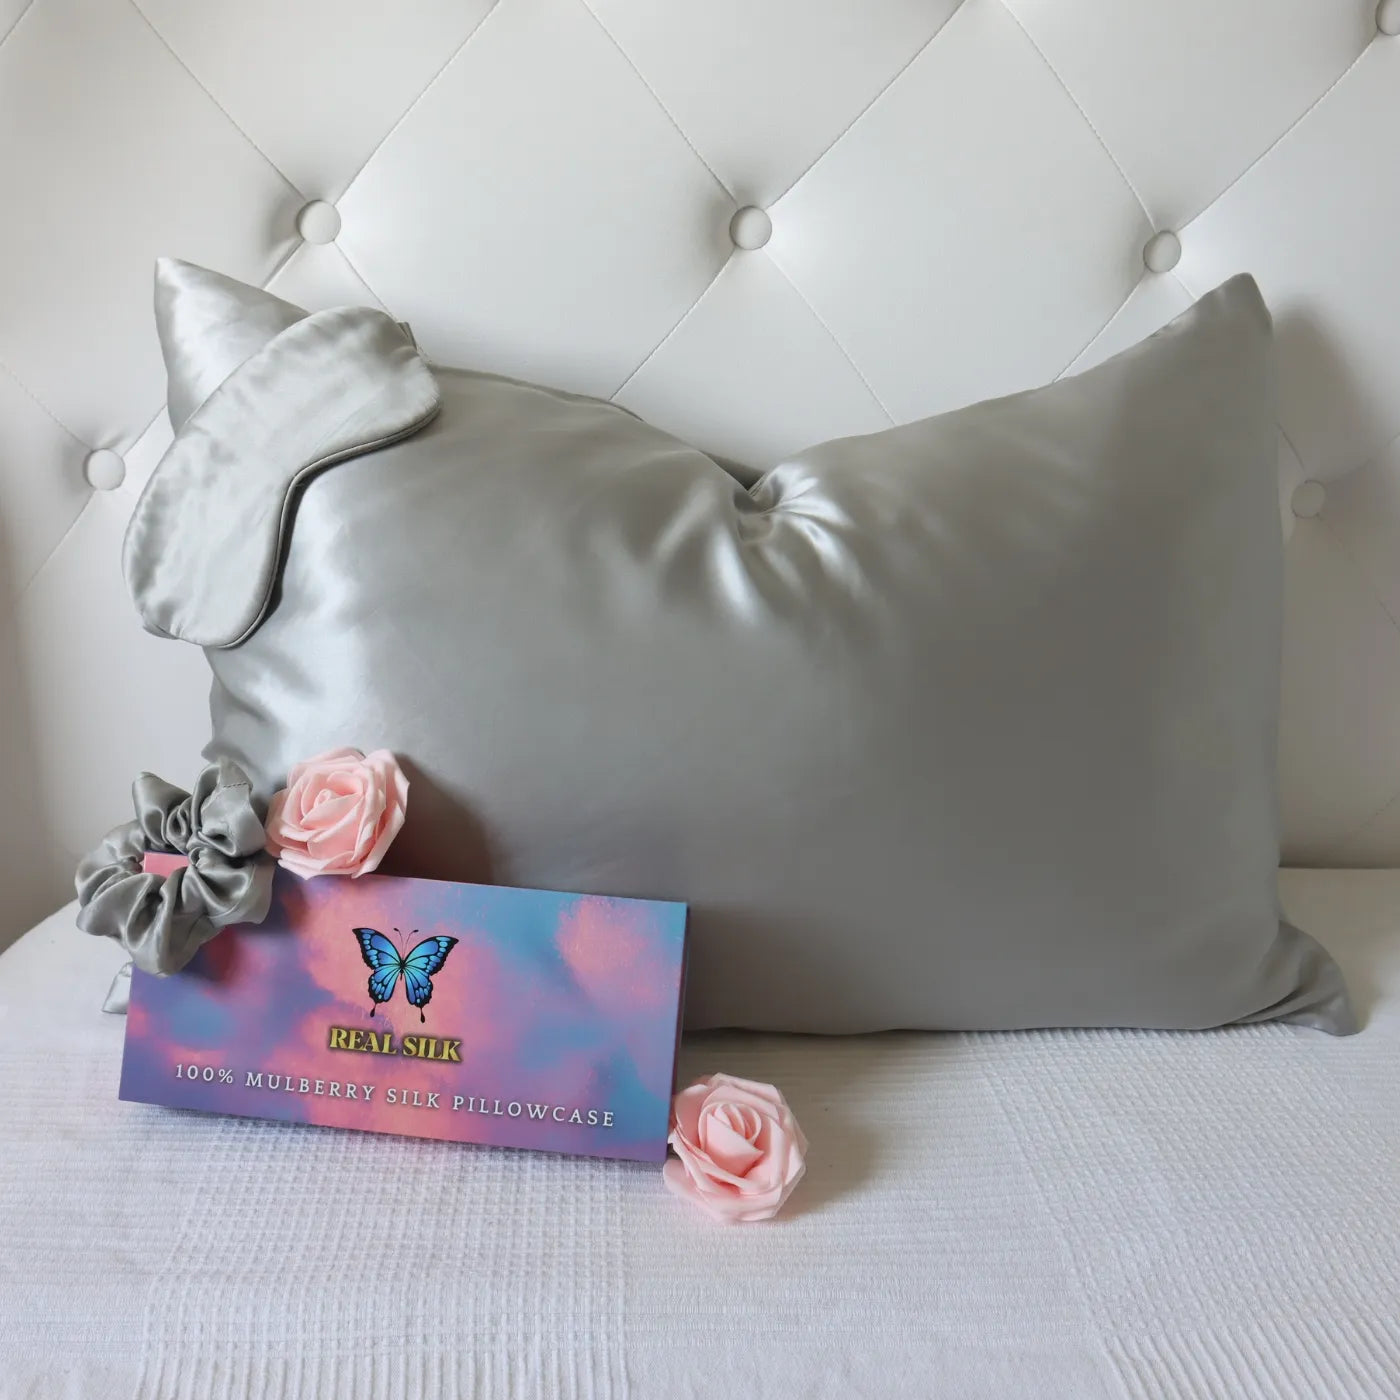 Mulberry Silk Gift Set - 22 Momme Silk Pillowcase, Sleeping Mask & Hair Scrunchie Silver light grey